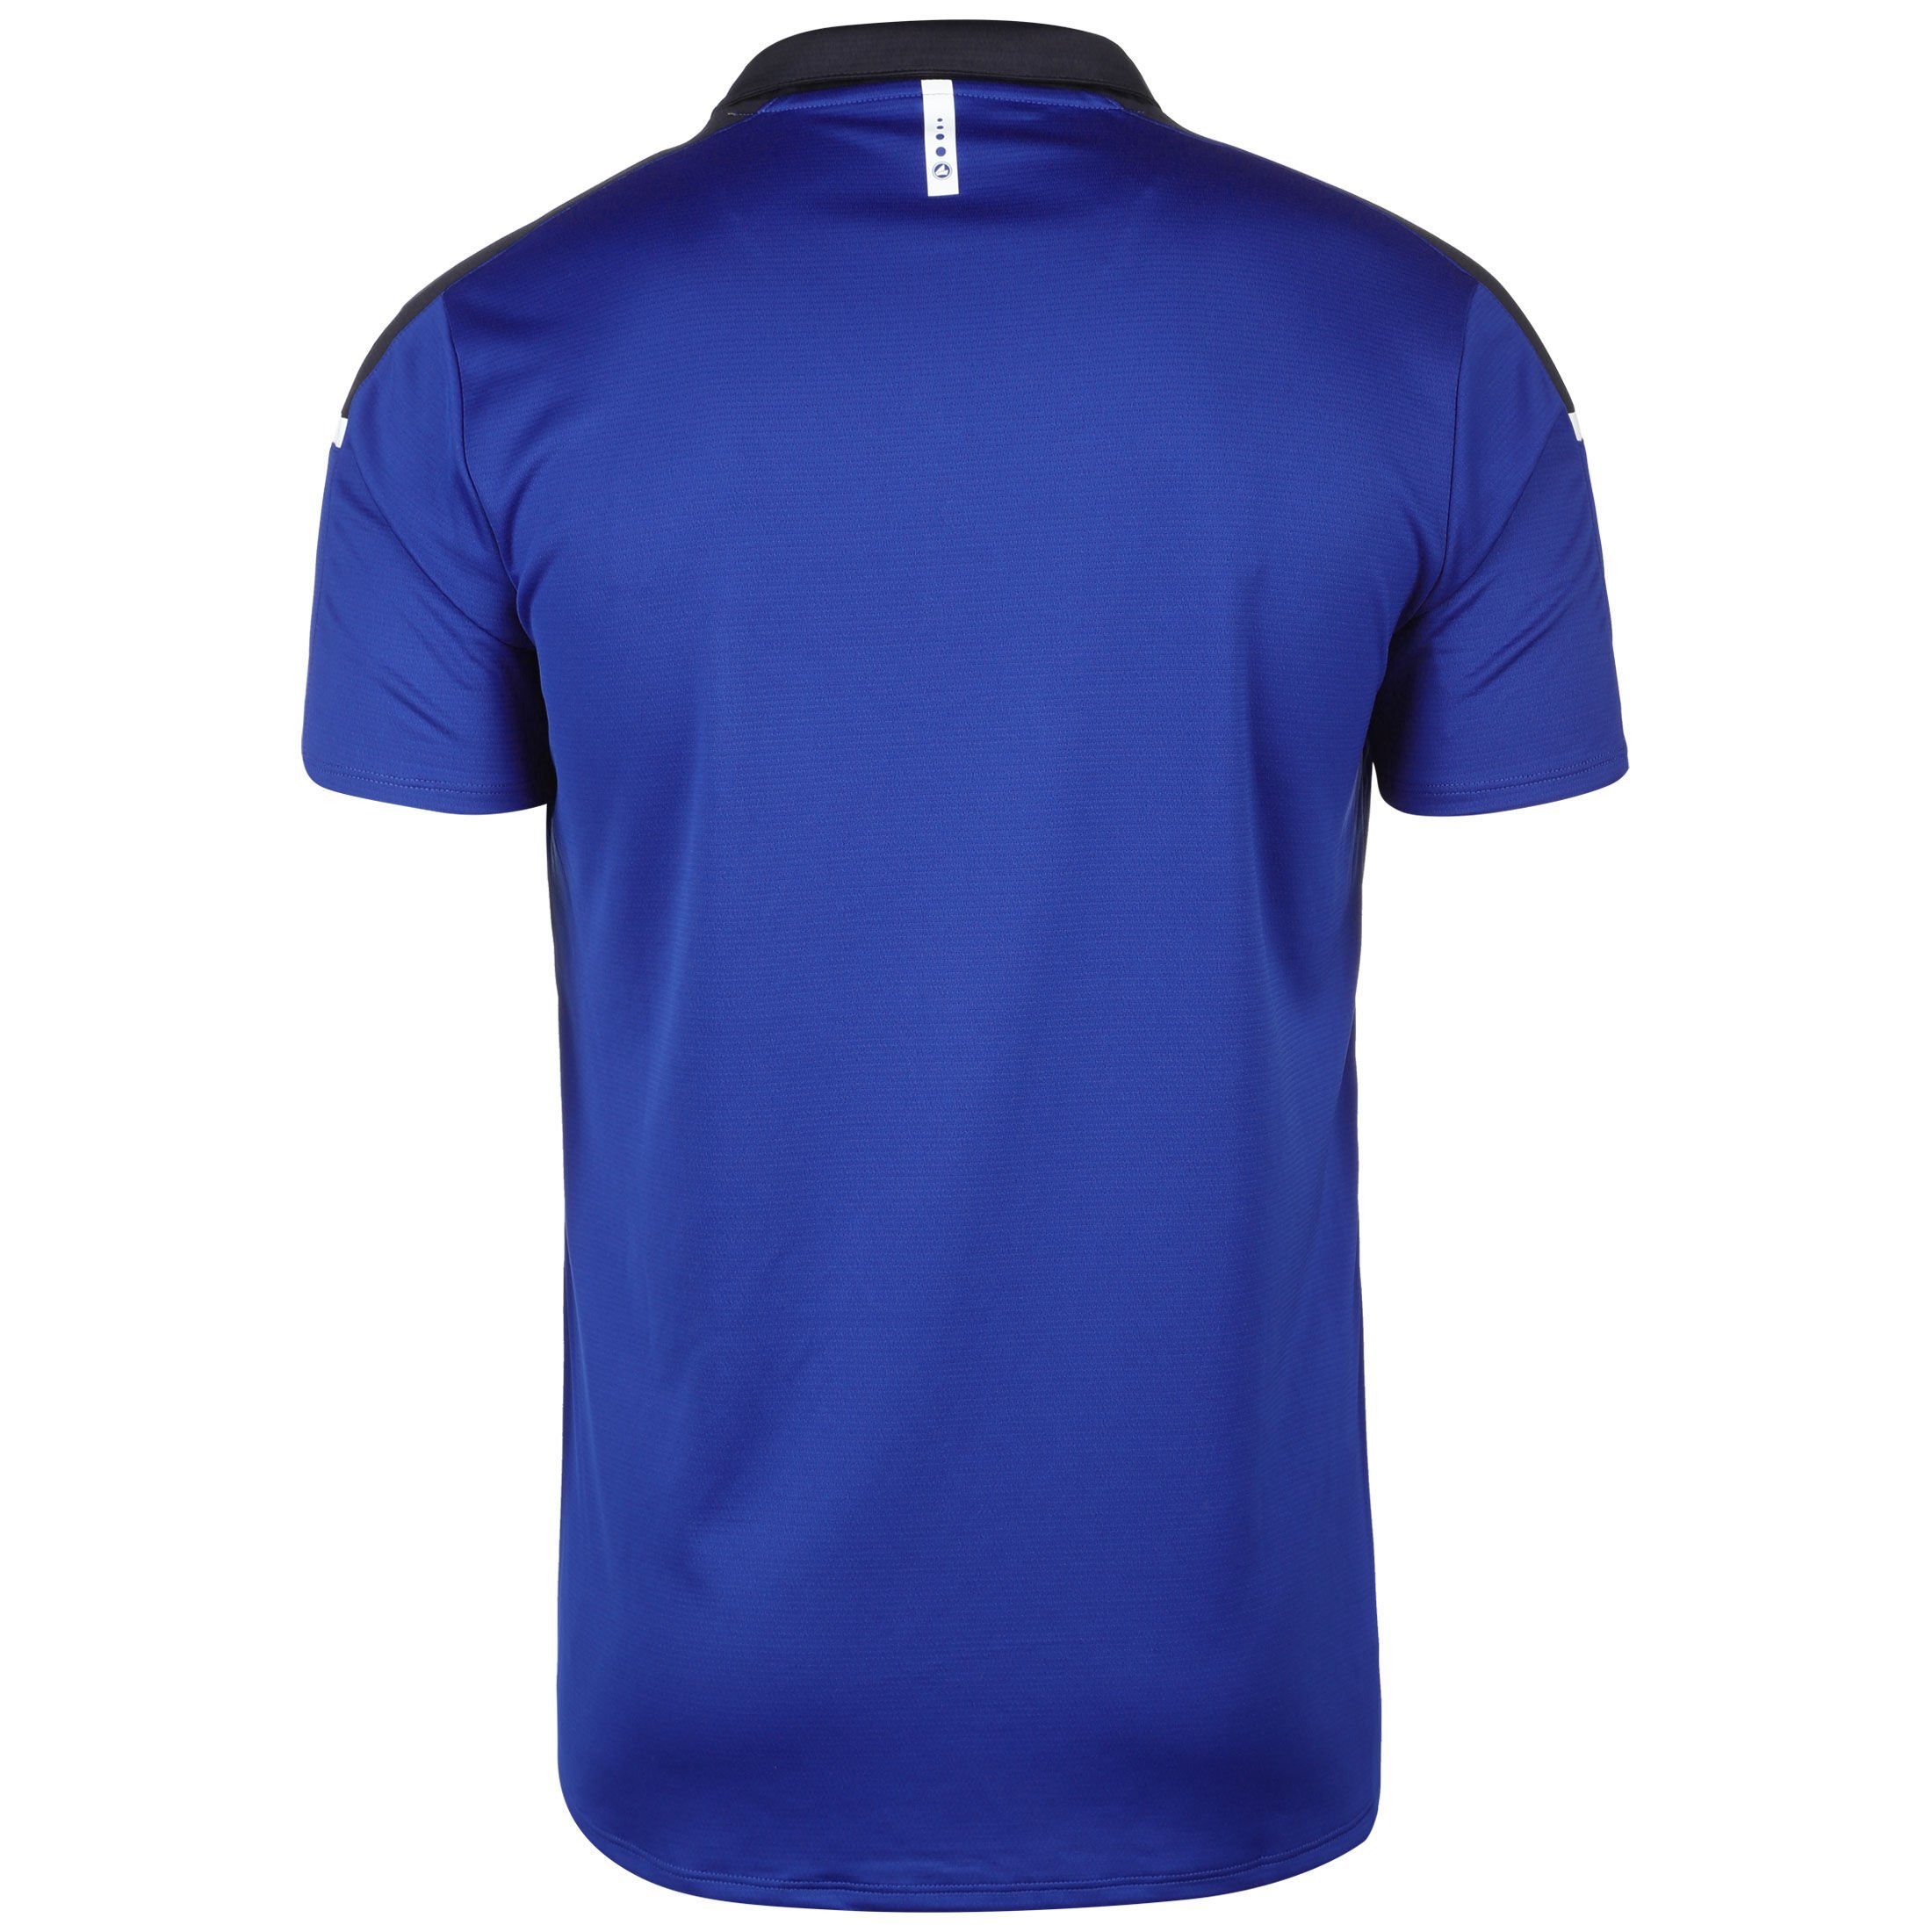 Jako Poloshirt Champ blau Herren 2.0 / Poloshirt dunkelblau